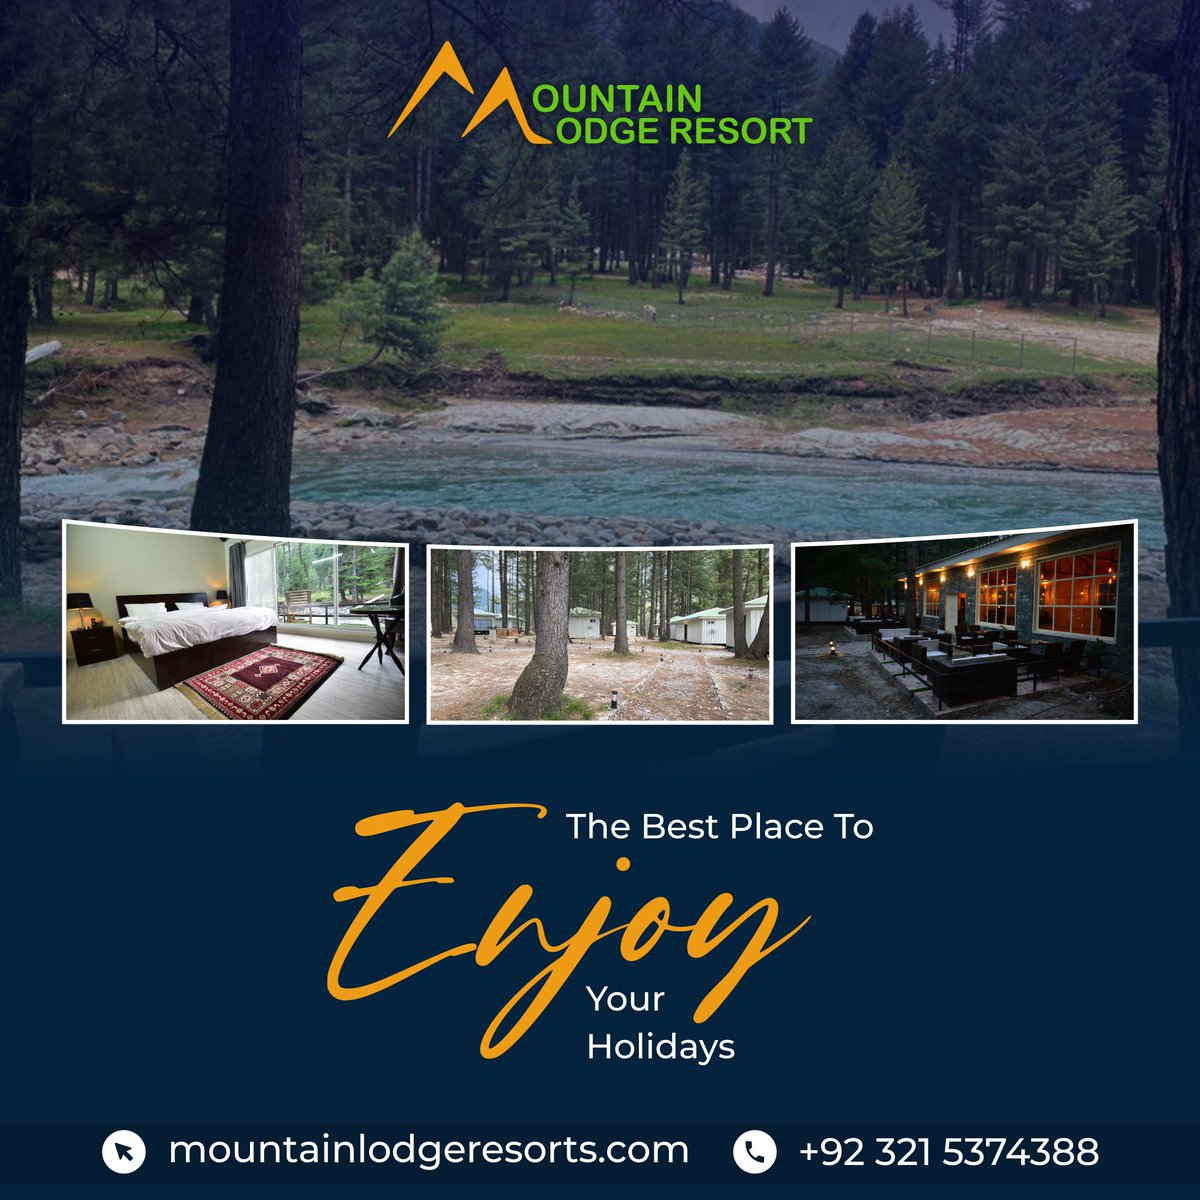 𝐓𝐡𝐞 𝐔𝐥𝐭𝐢𝐦𝐚𝐭𝐞 𝐃𝐞𝐬𝐭𝐢𝐧𝐚𝐭𝐢𝐨𝐧 𝐭𝐨 𝐄𝐧𝐣𝐨𝐲 𝐘𝐨𝐮𝐫 𝐇𝐨𝐥𝐢𝐝𝐚𝐲𝐬! 

#mountainlodgeresort #mountain #mountains #mountainlife #lodge #resort #resorts #resortlife #Kumrat #kumratvalley #KPK #pakistan #pakistanpics #travel #tour #tourist #tourism